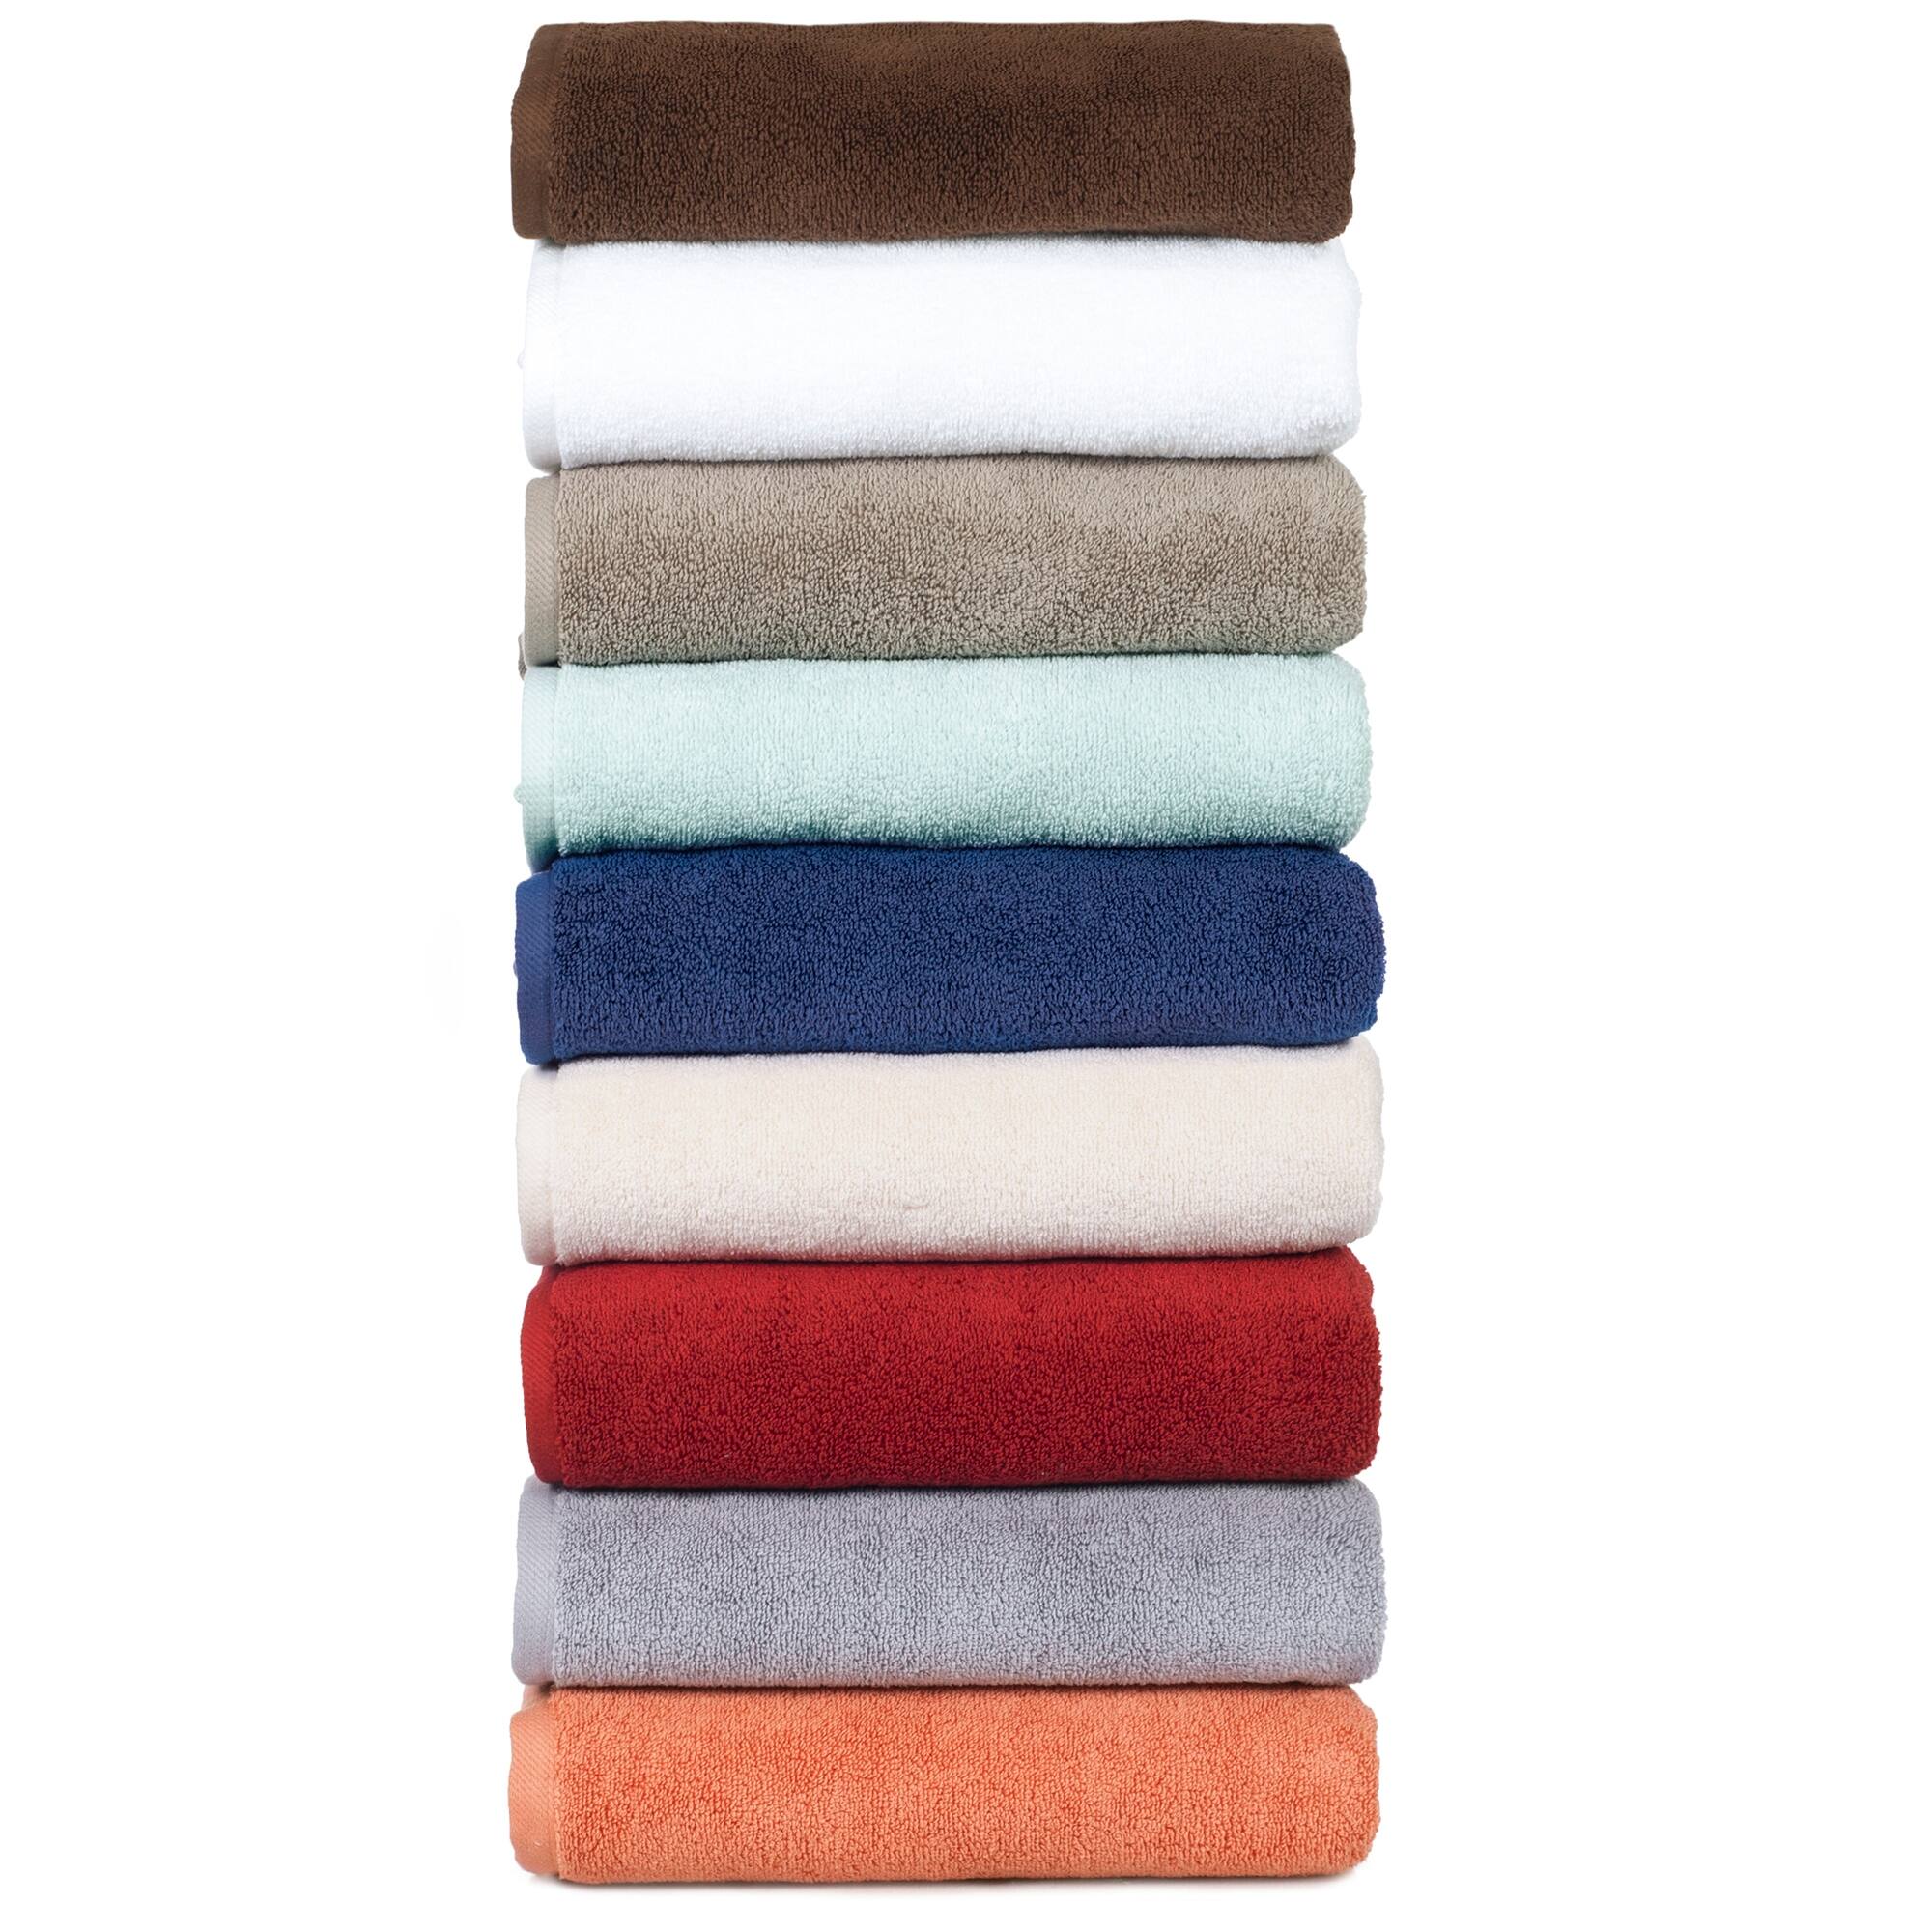 6-Piece Complete Bath Towels Set - 100% Cotton Absorbent Towels with Zero Twist Machine Washable by Lavish Home (Burgundy)